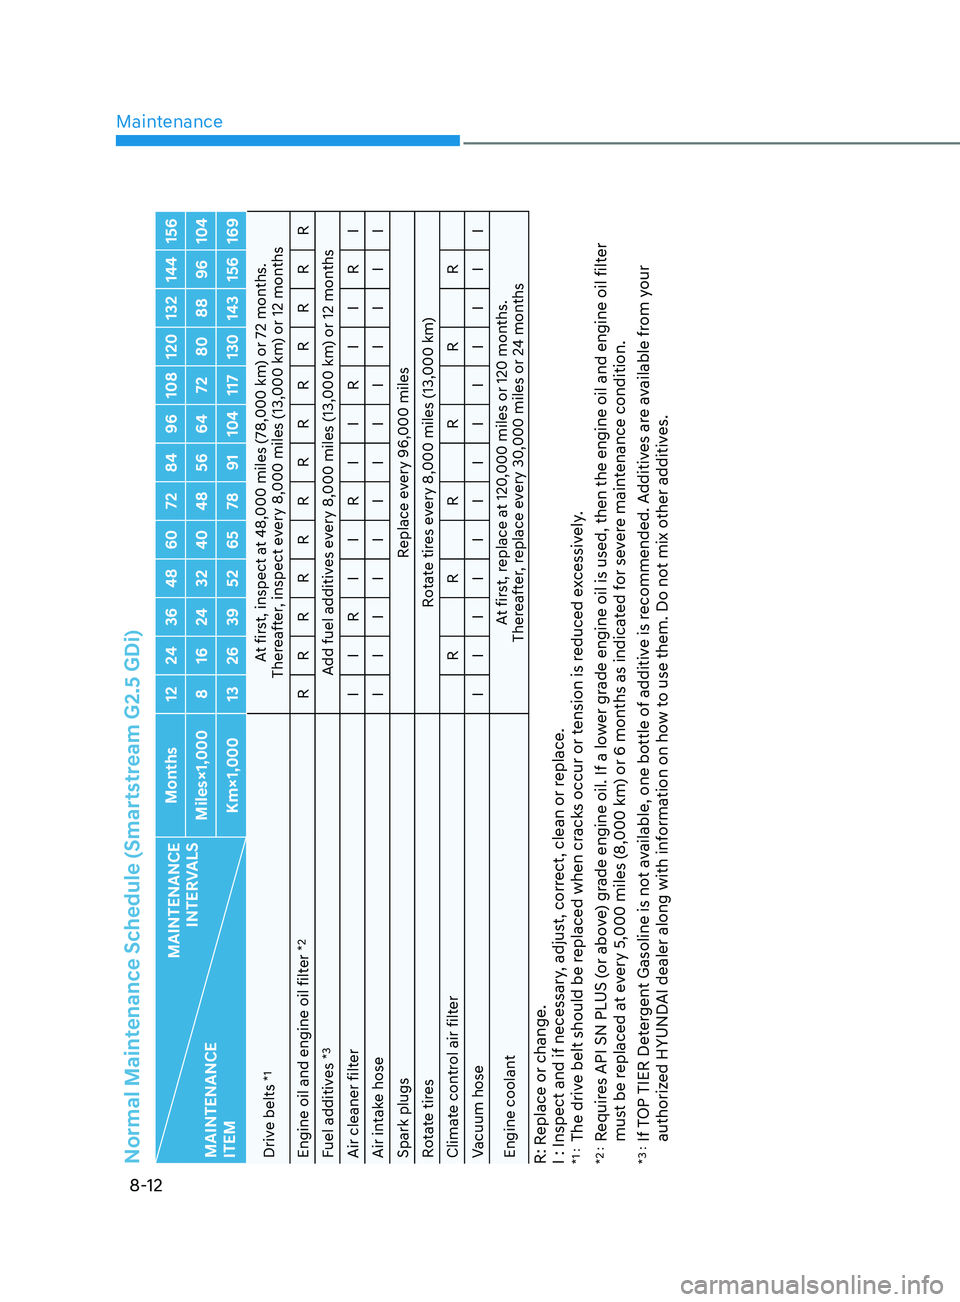 HYUNDAI SONATA LIMITED 2020  Owners Manual Maintenance
8-12
Normal Maintenance Schedule (Smartstream G2.5 GDi)
MAINTENANCE  INTERVALS
MAINTENANCE  
ITEM Months 12 24 36 48 60 72 84 96 108 120 132 144 156
Miles×1,000 8 16 24 32 40 48 56 64 72 